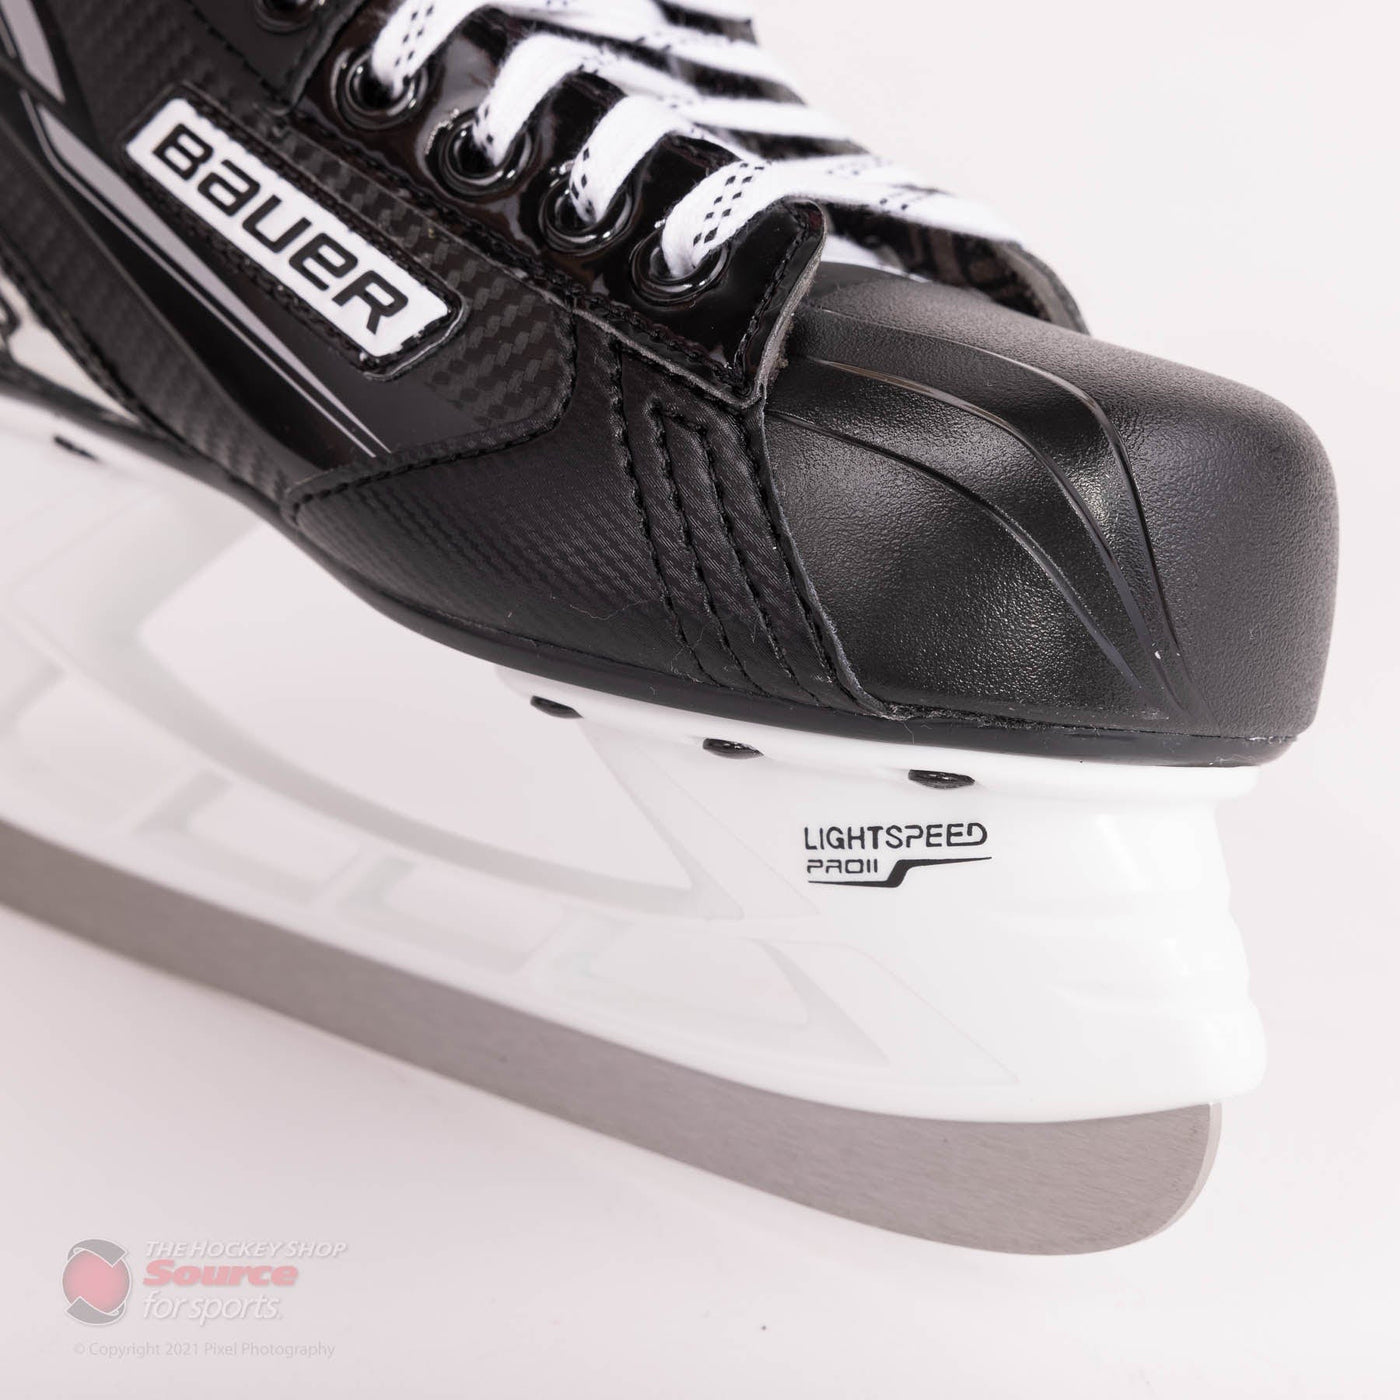 Bauer Vapor X3.5 Junior Hockey Skates